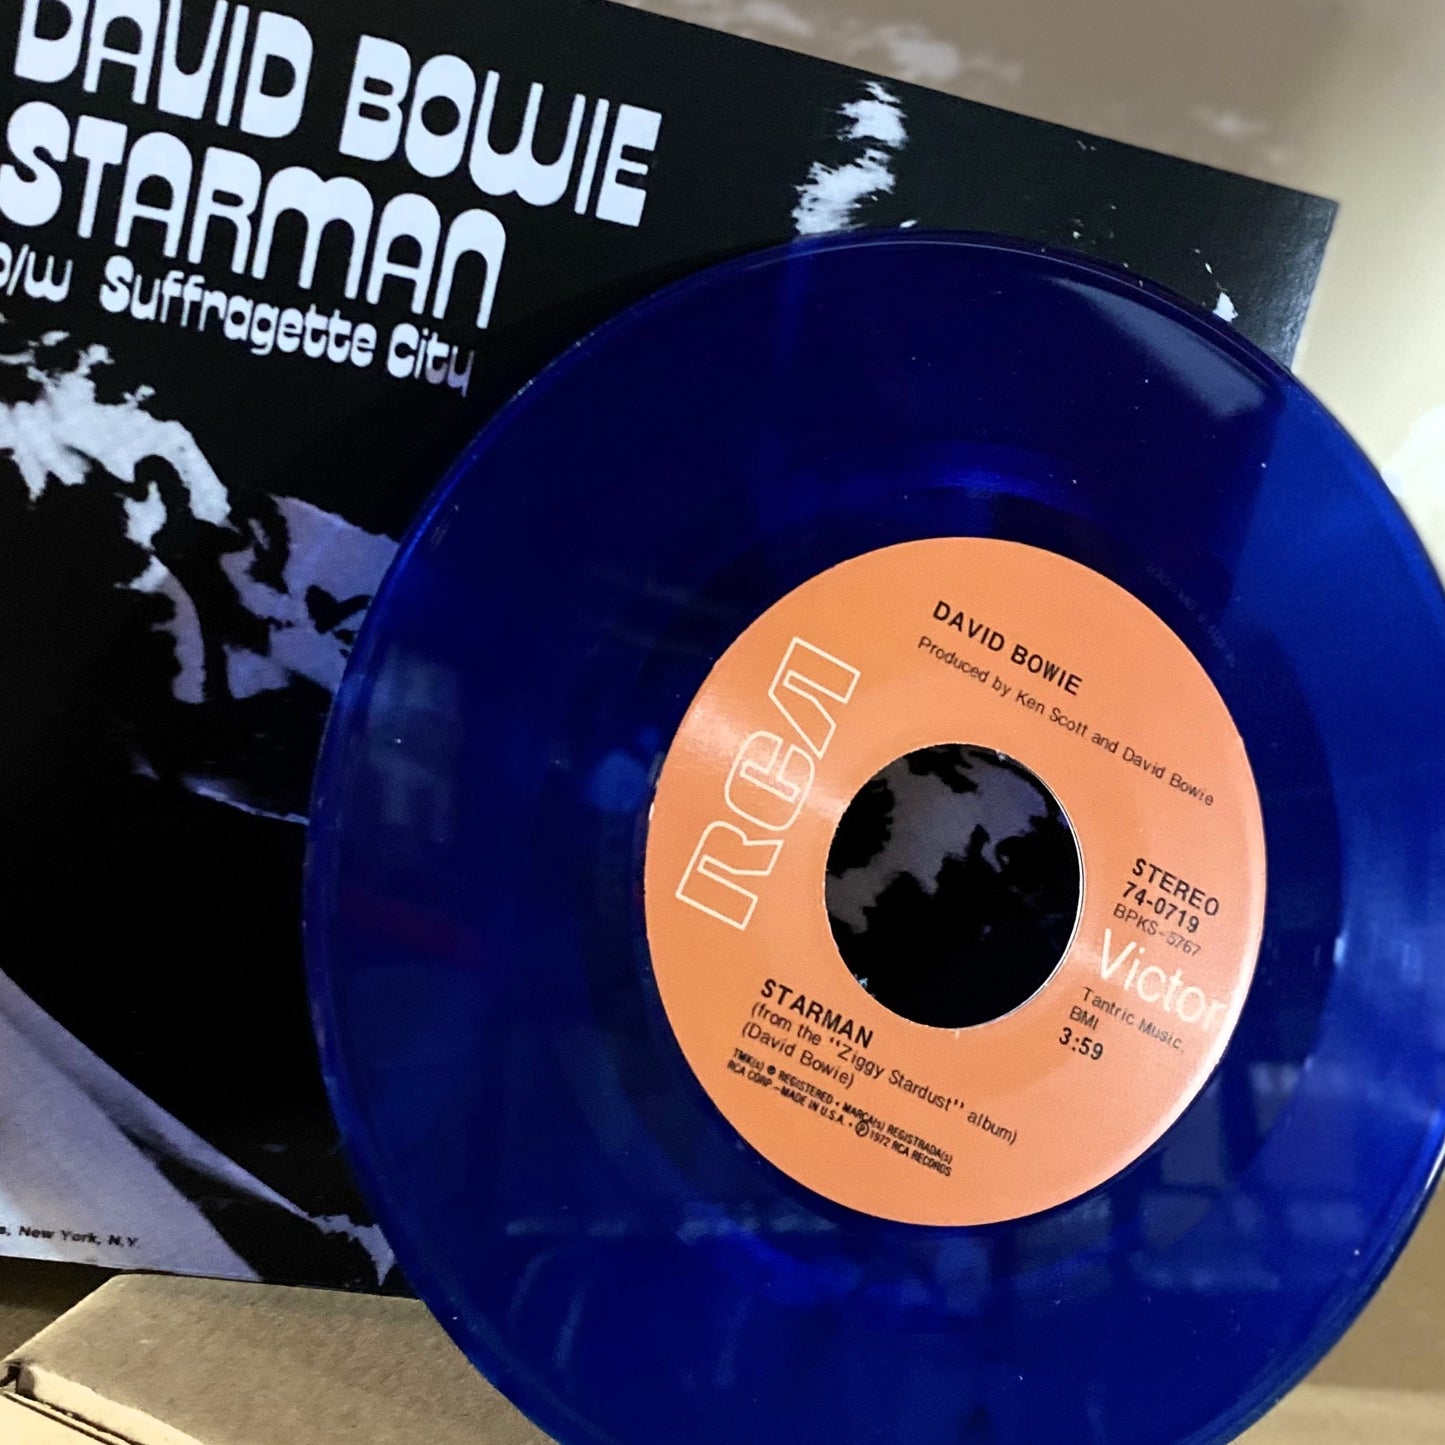 DAVID BOWIE – Starman / Suffragette City 7" (blue translucent vinyl)